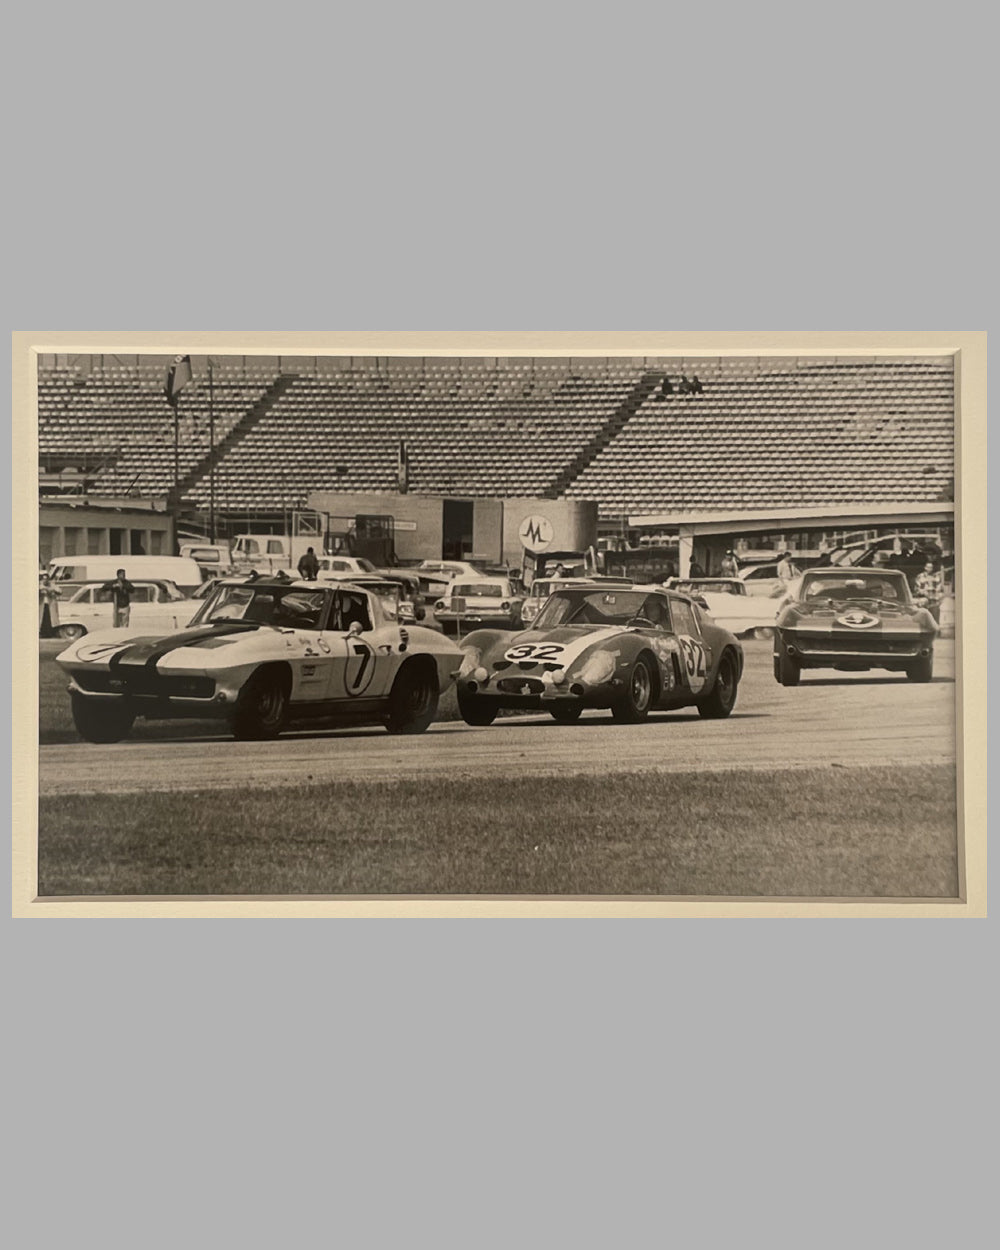 Daytona 200 race 1964 b&w photograph by Alice Bixler